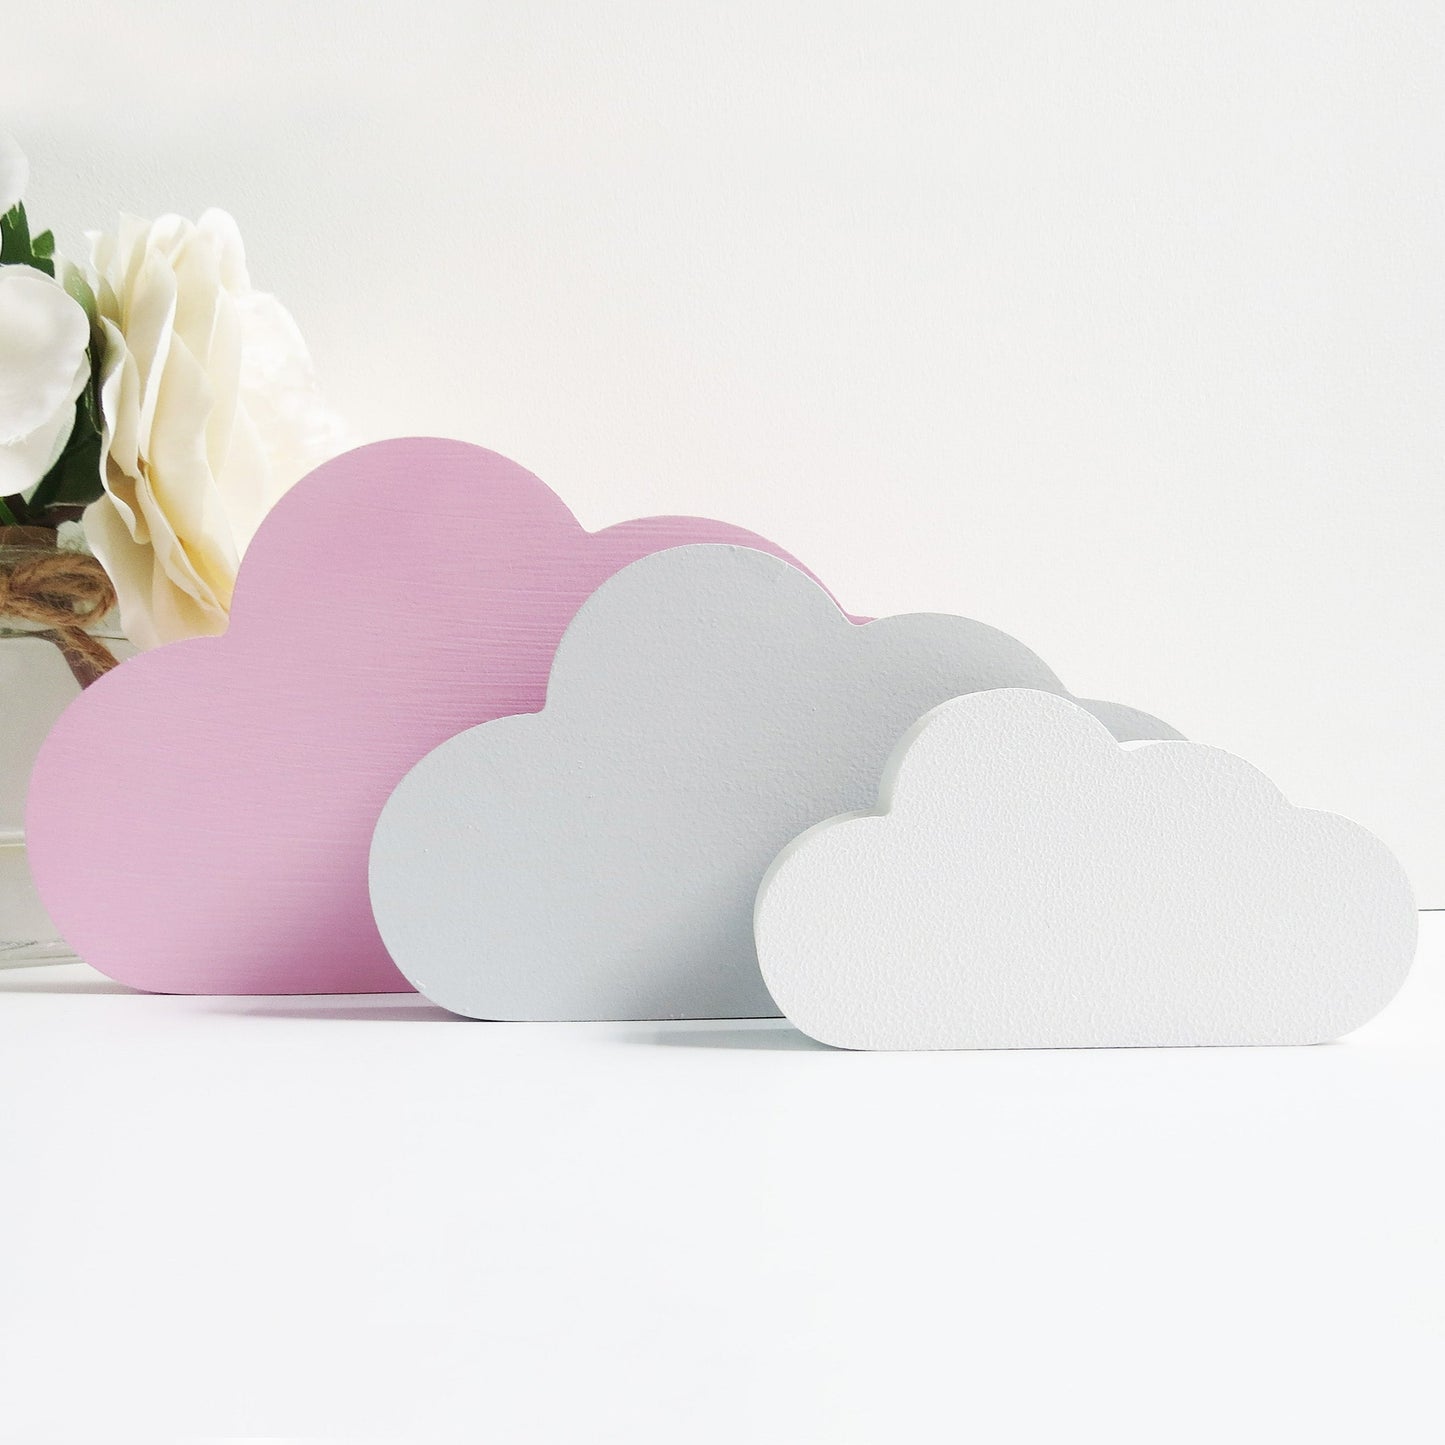 Freestanding Clouds (Pink/Grey)